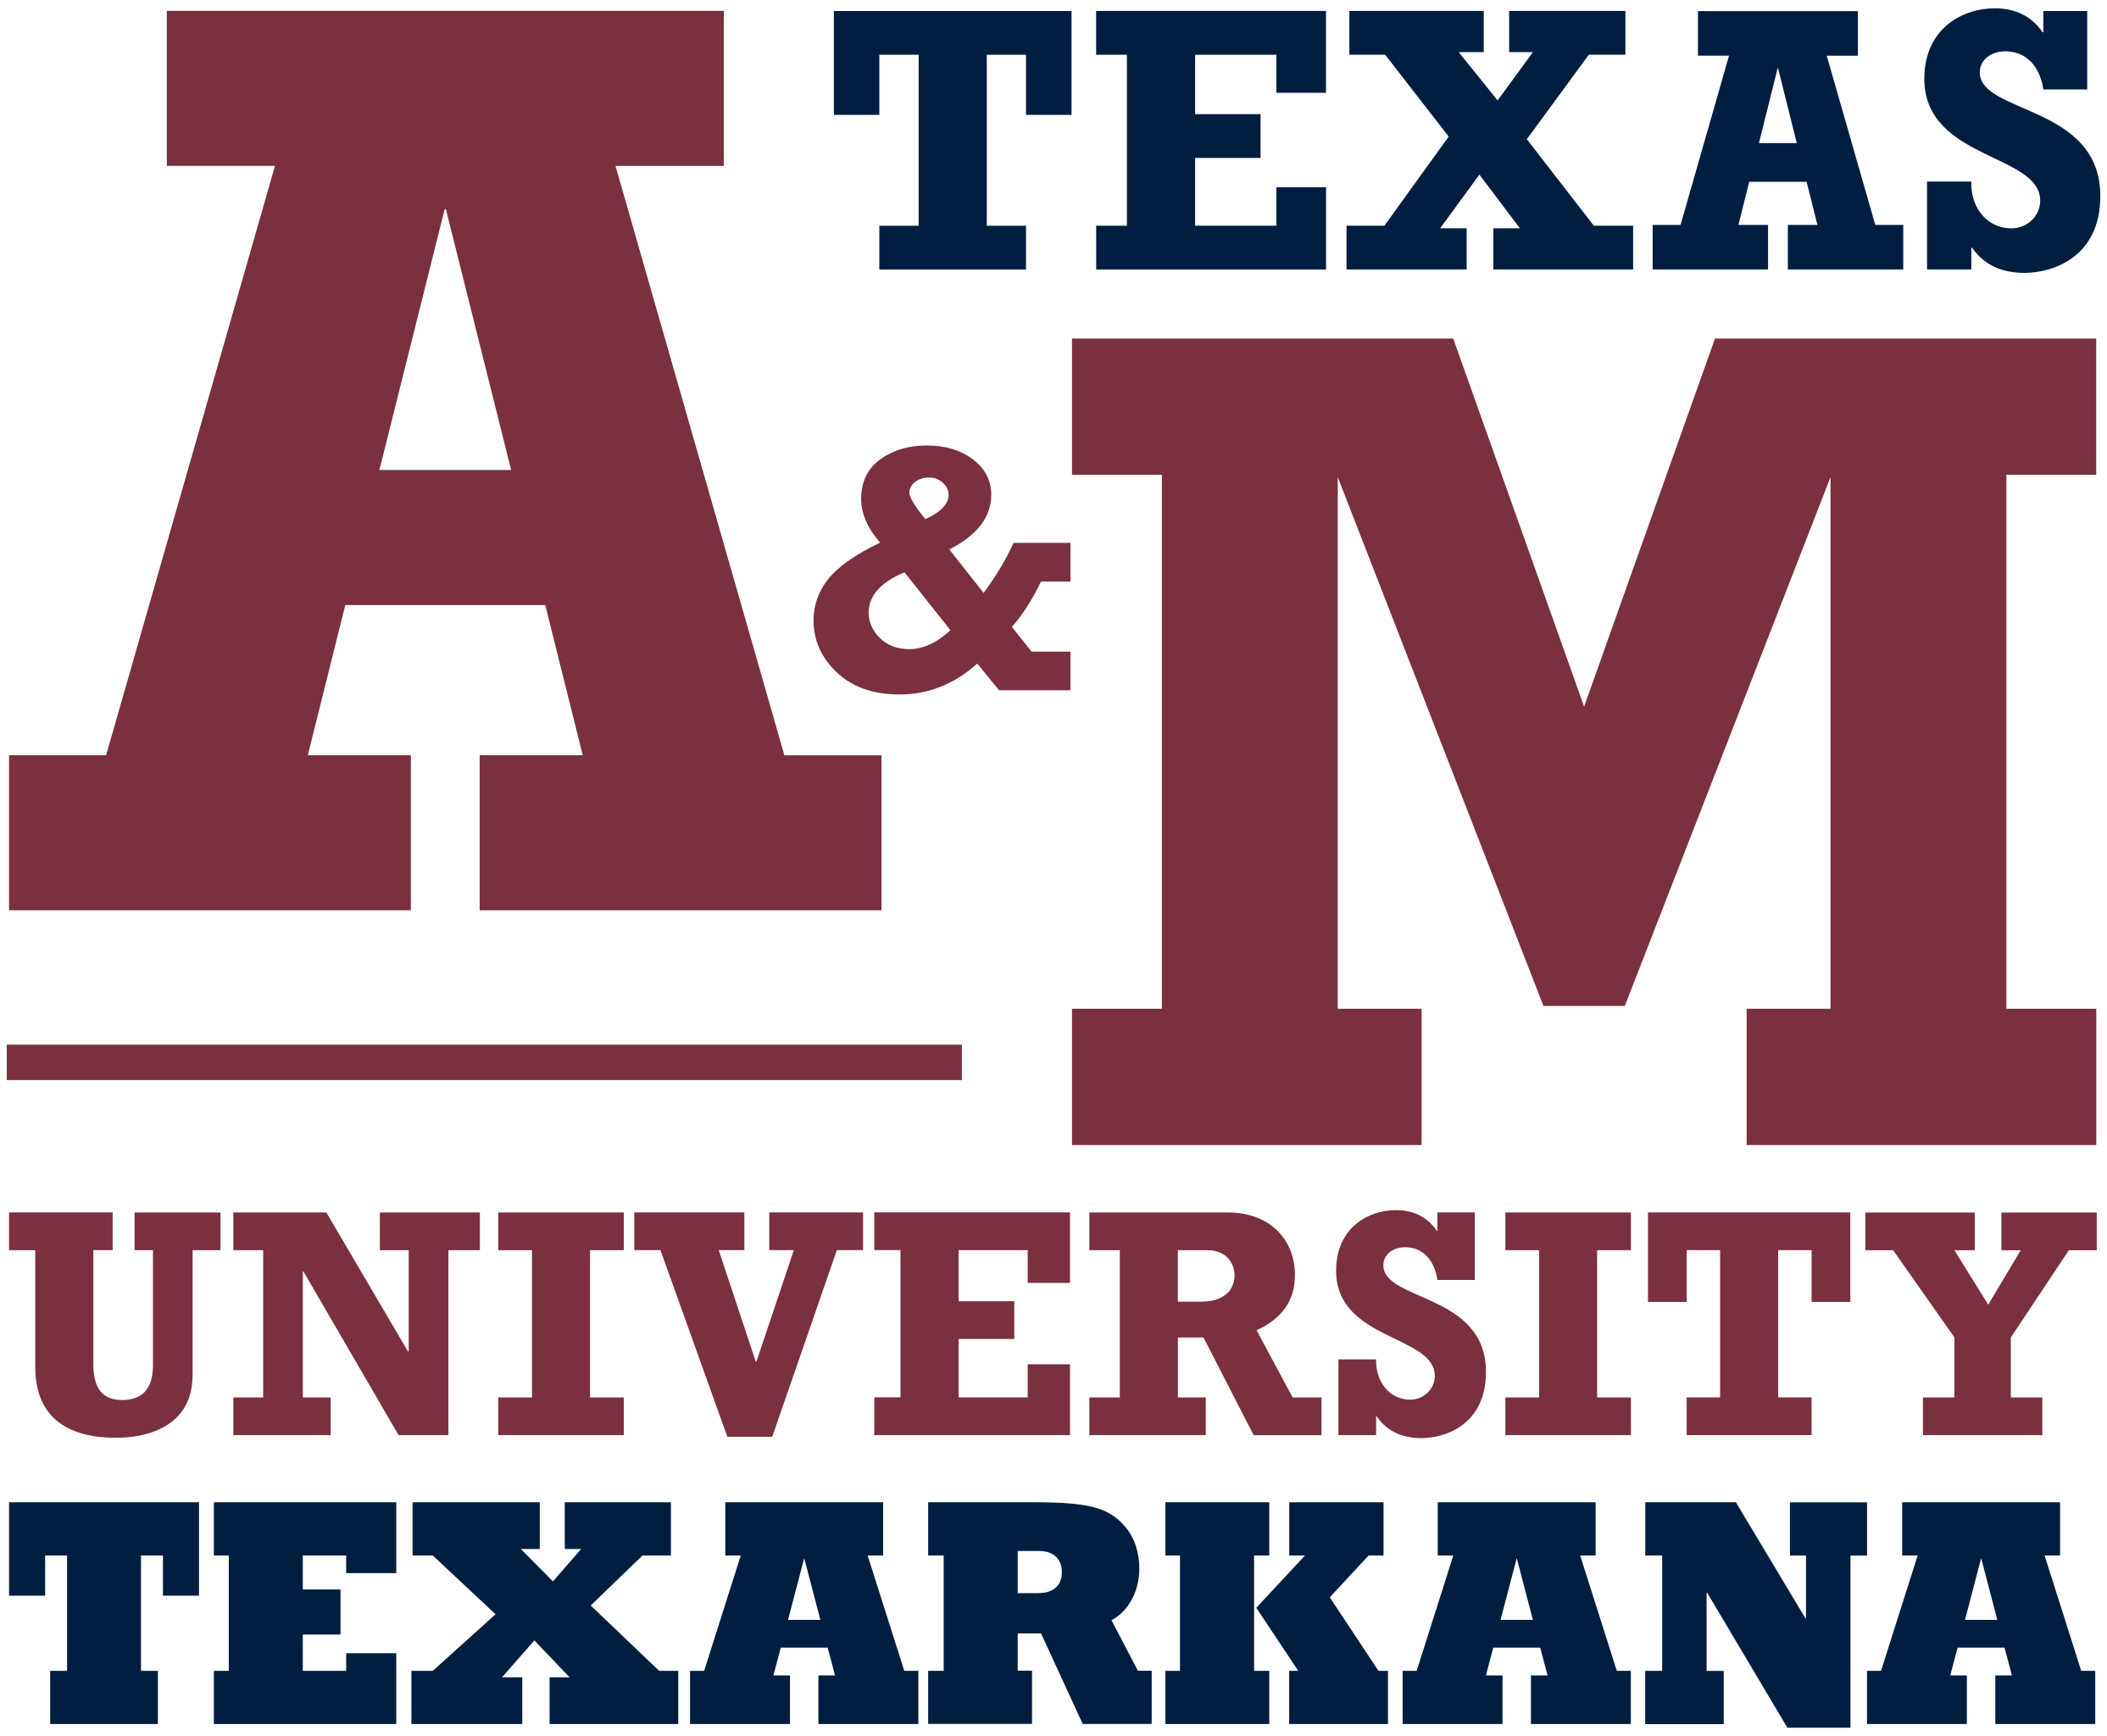 Texas A&M University Texarkana logo